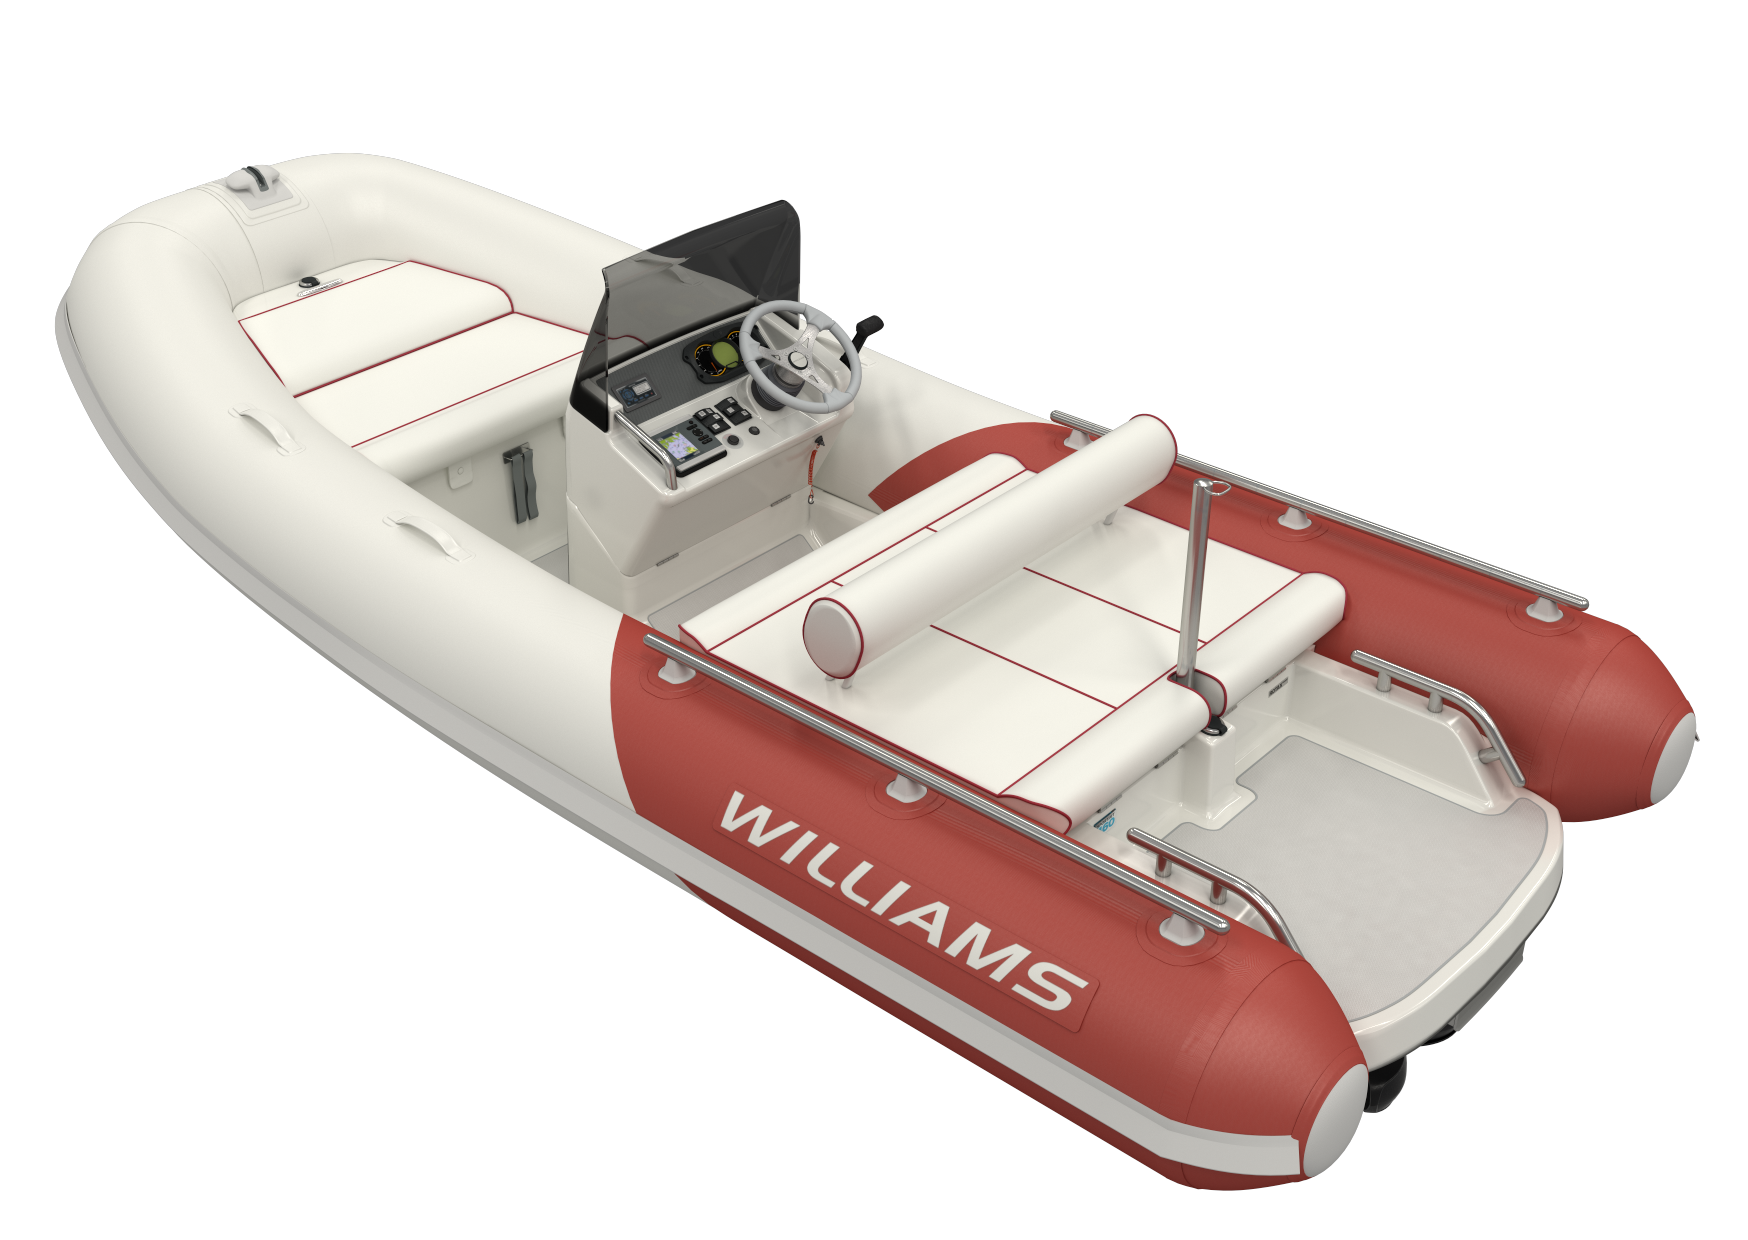 yacht tender williams